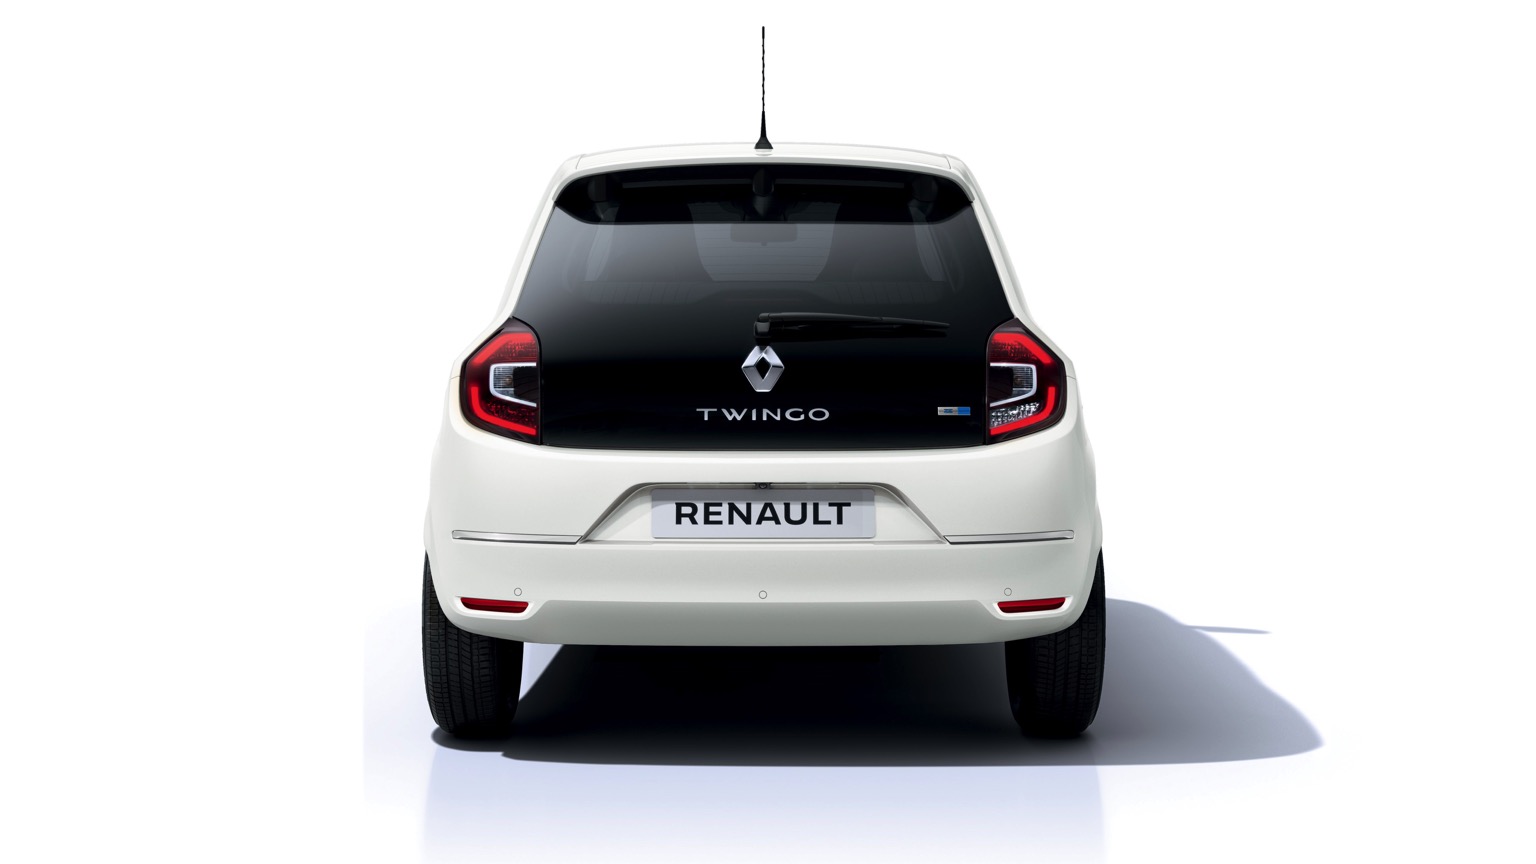 Renault Twingo Electric Seating Capacity